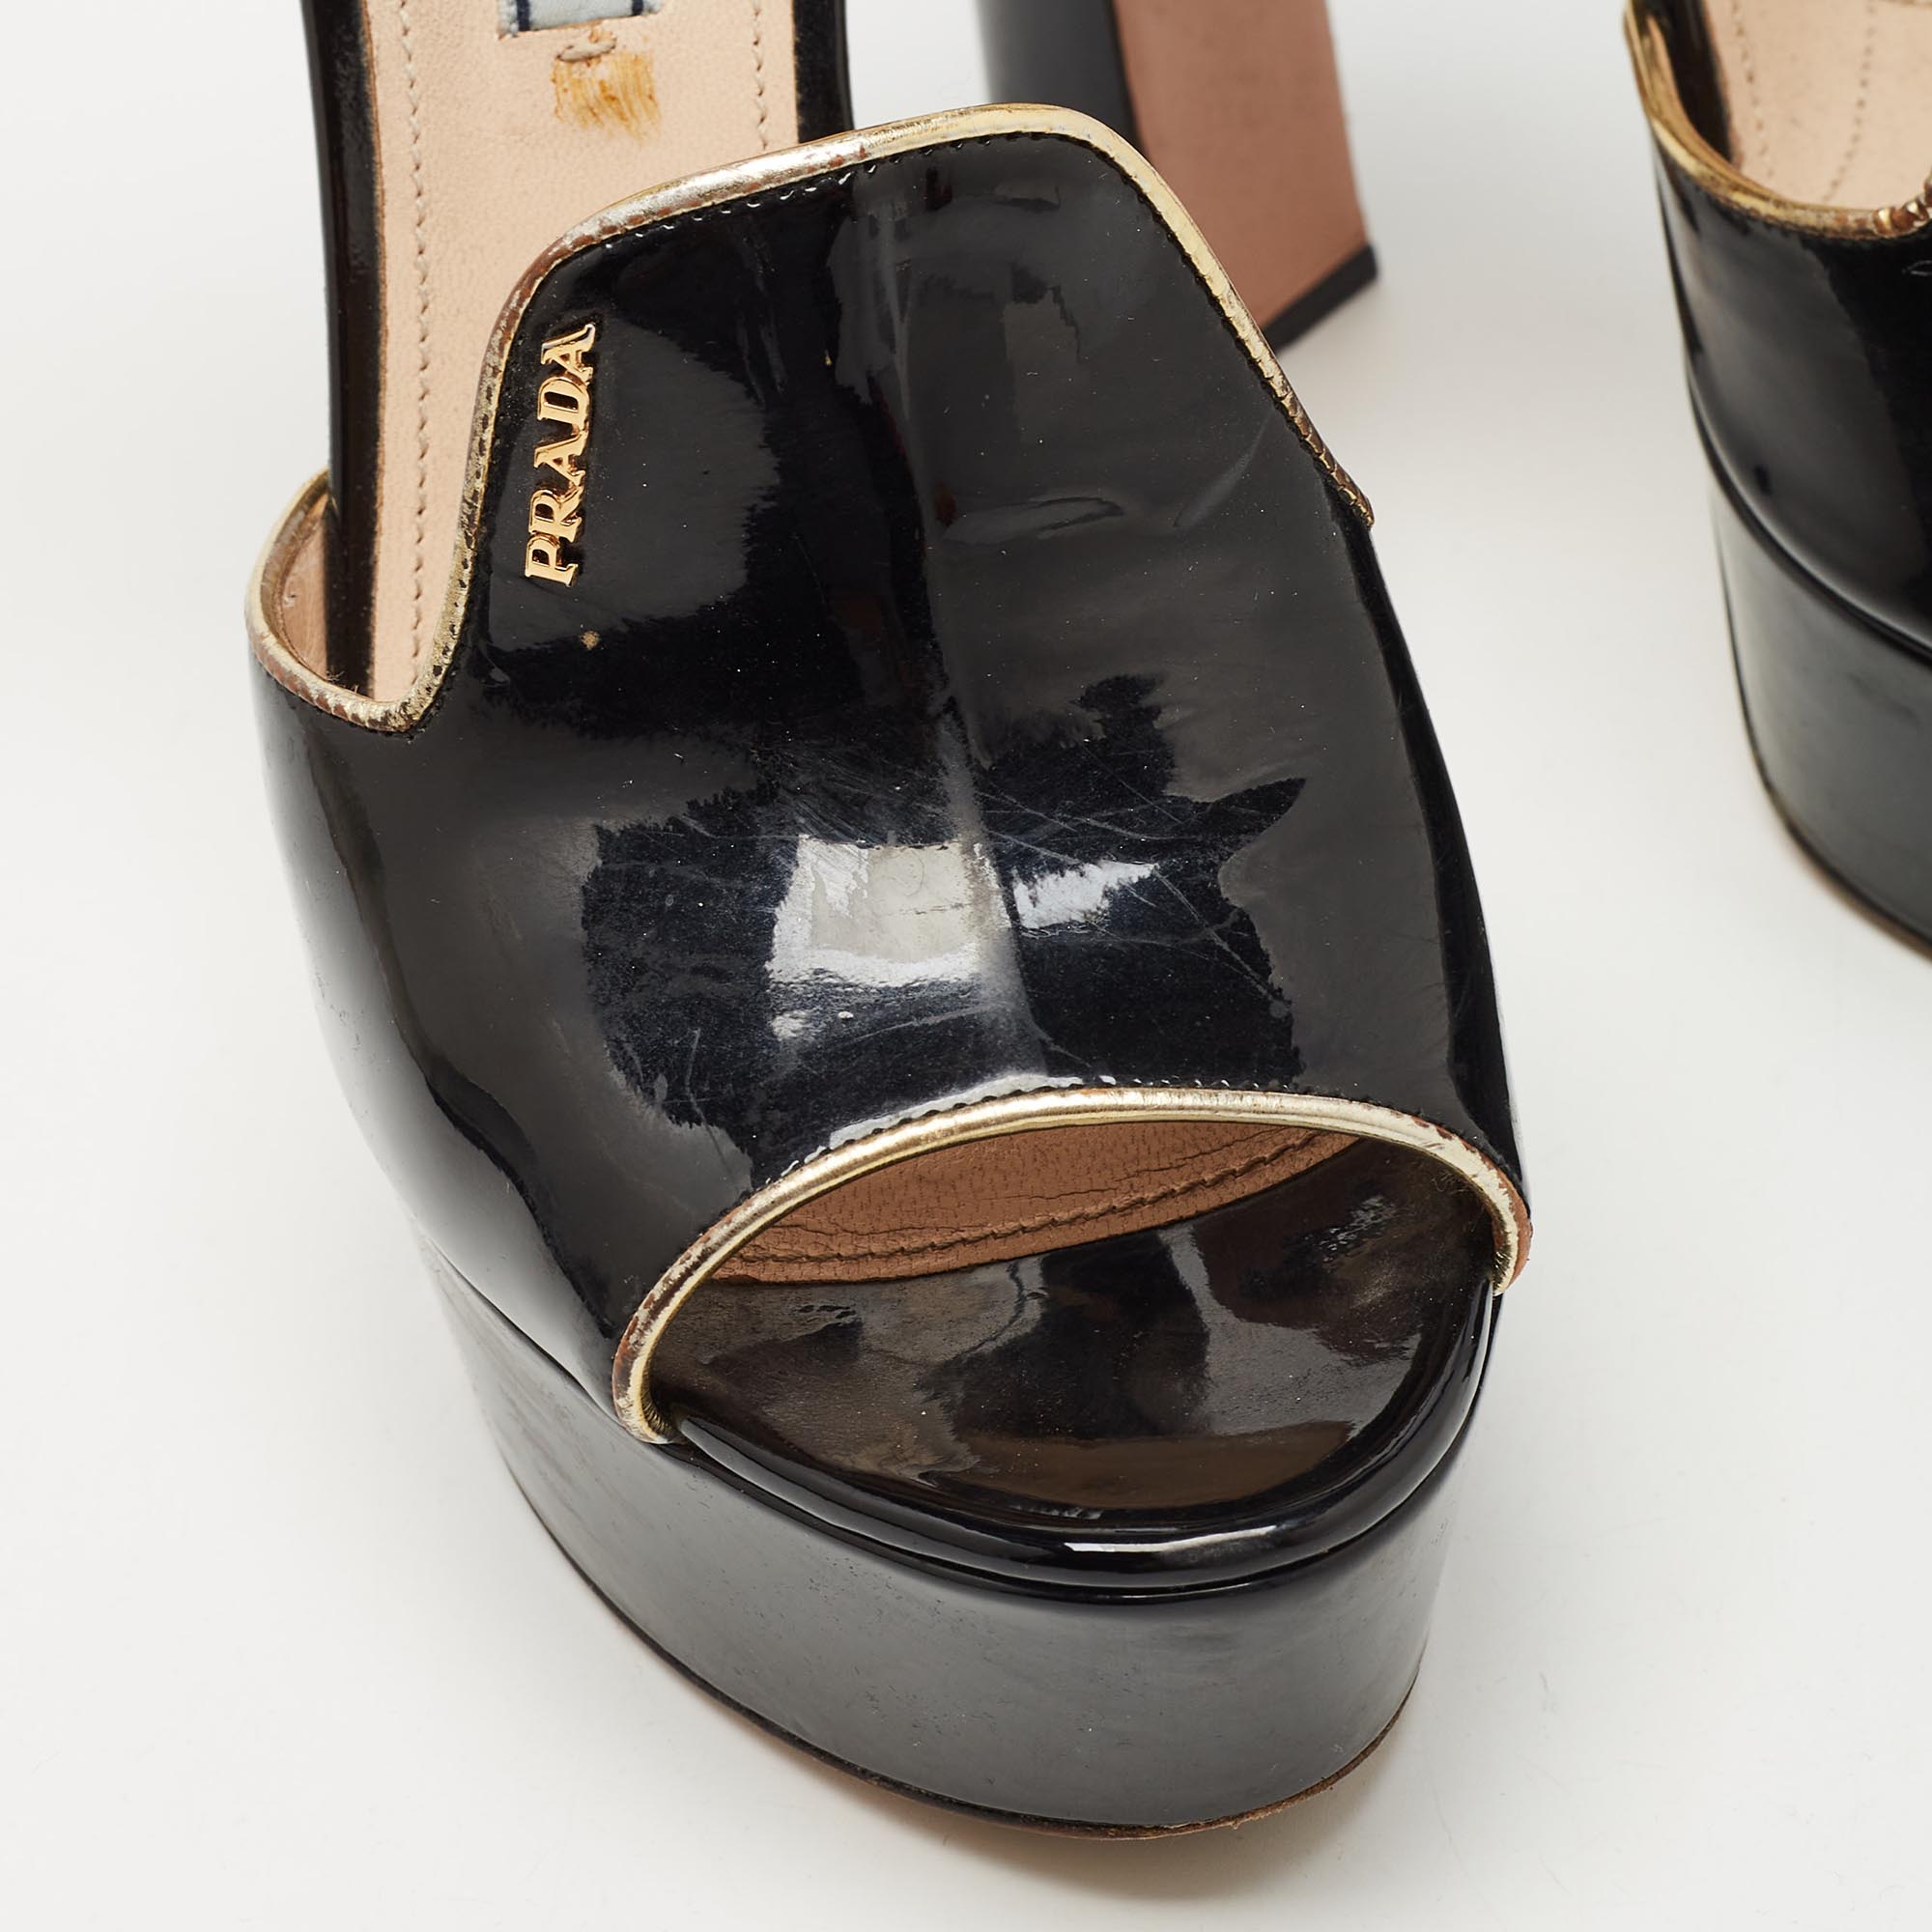 Prada Black Patent Leather Ankle Strap Platform Sandals Size 38